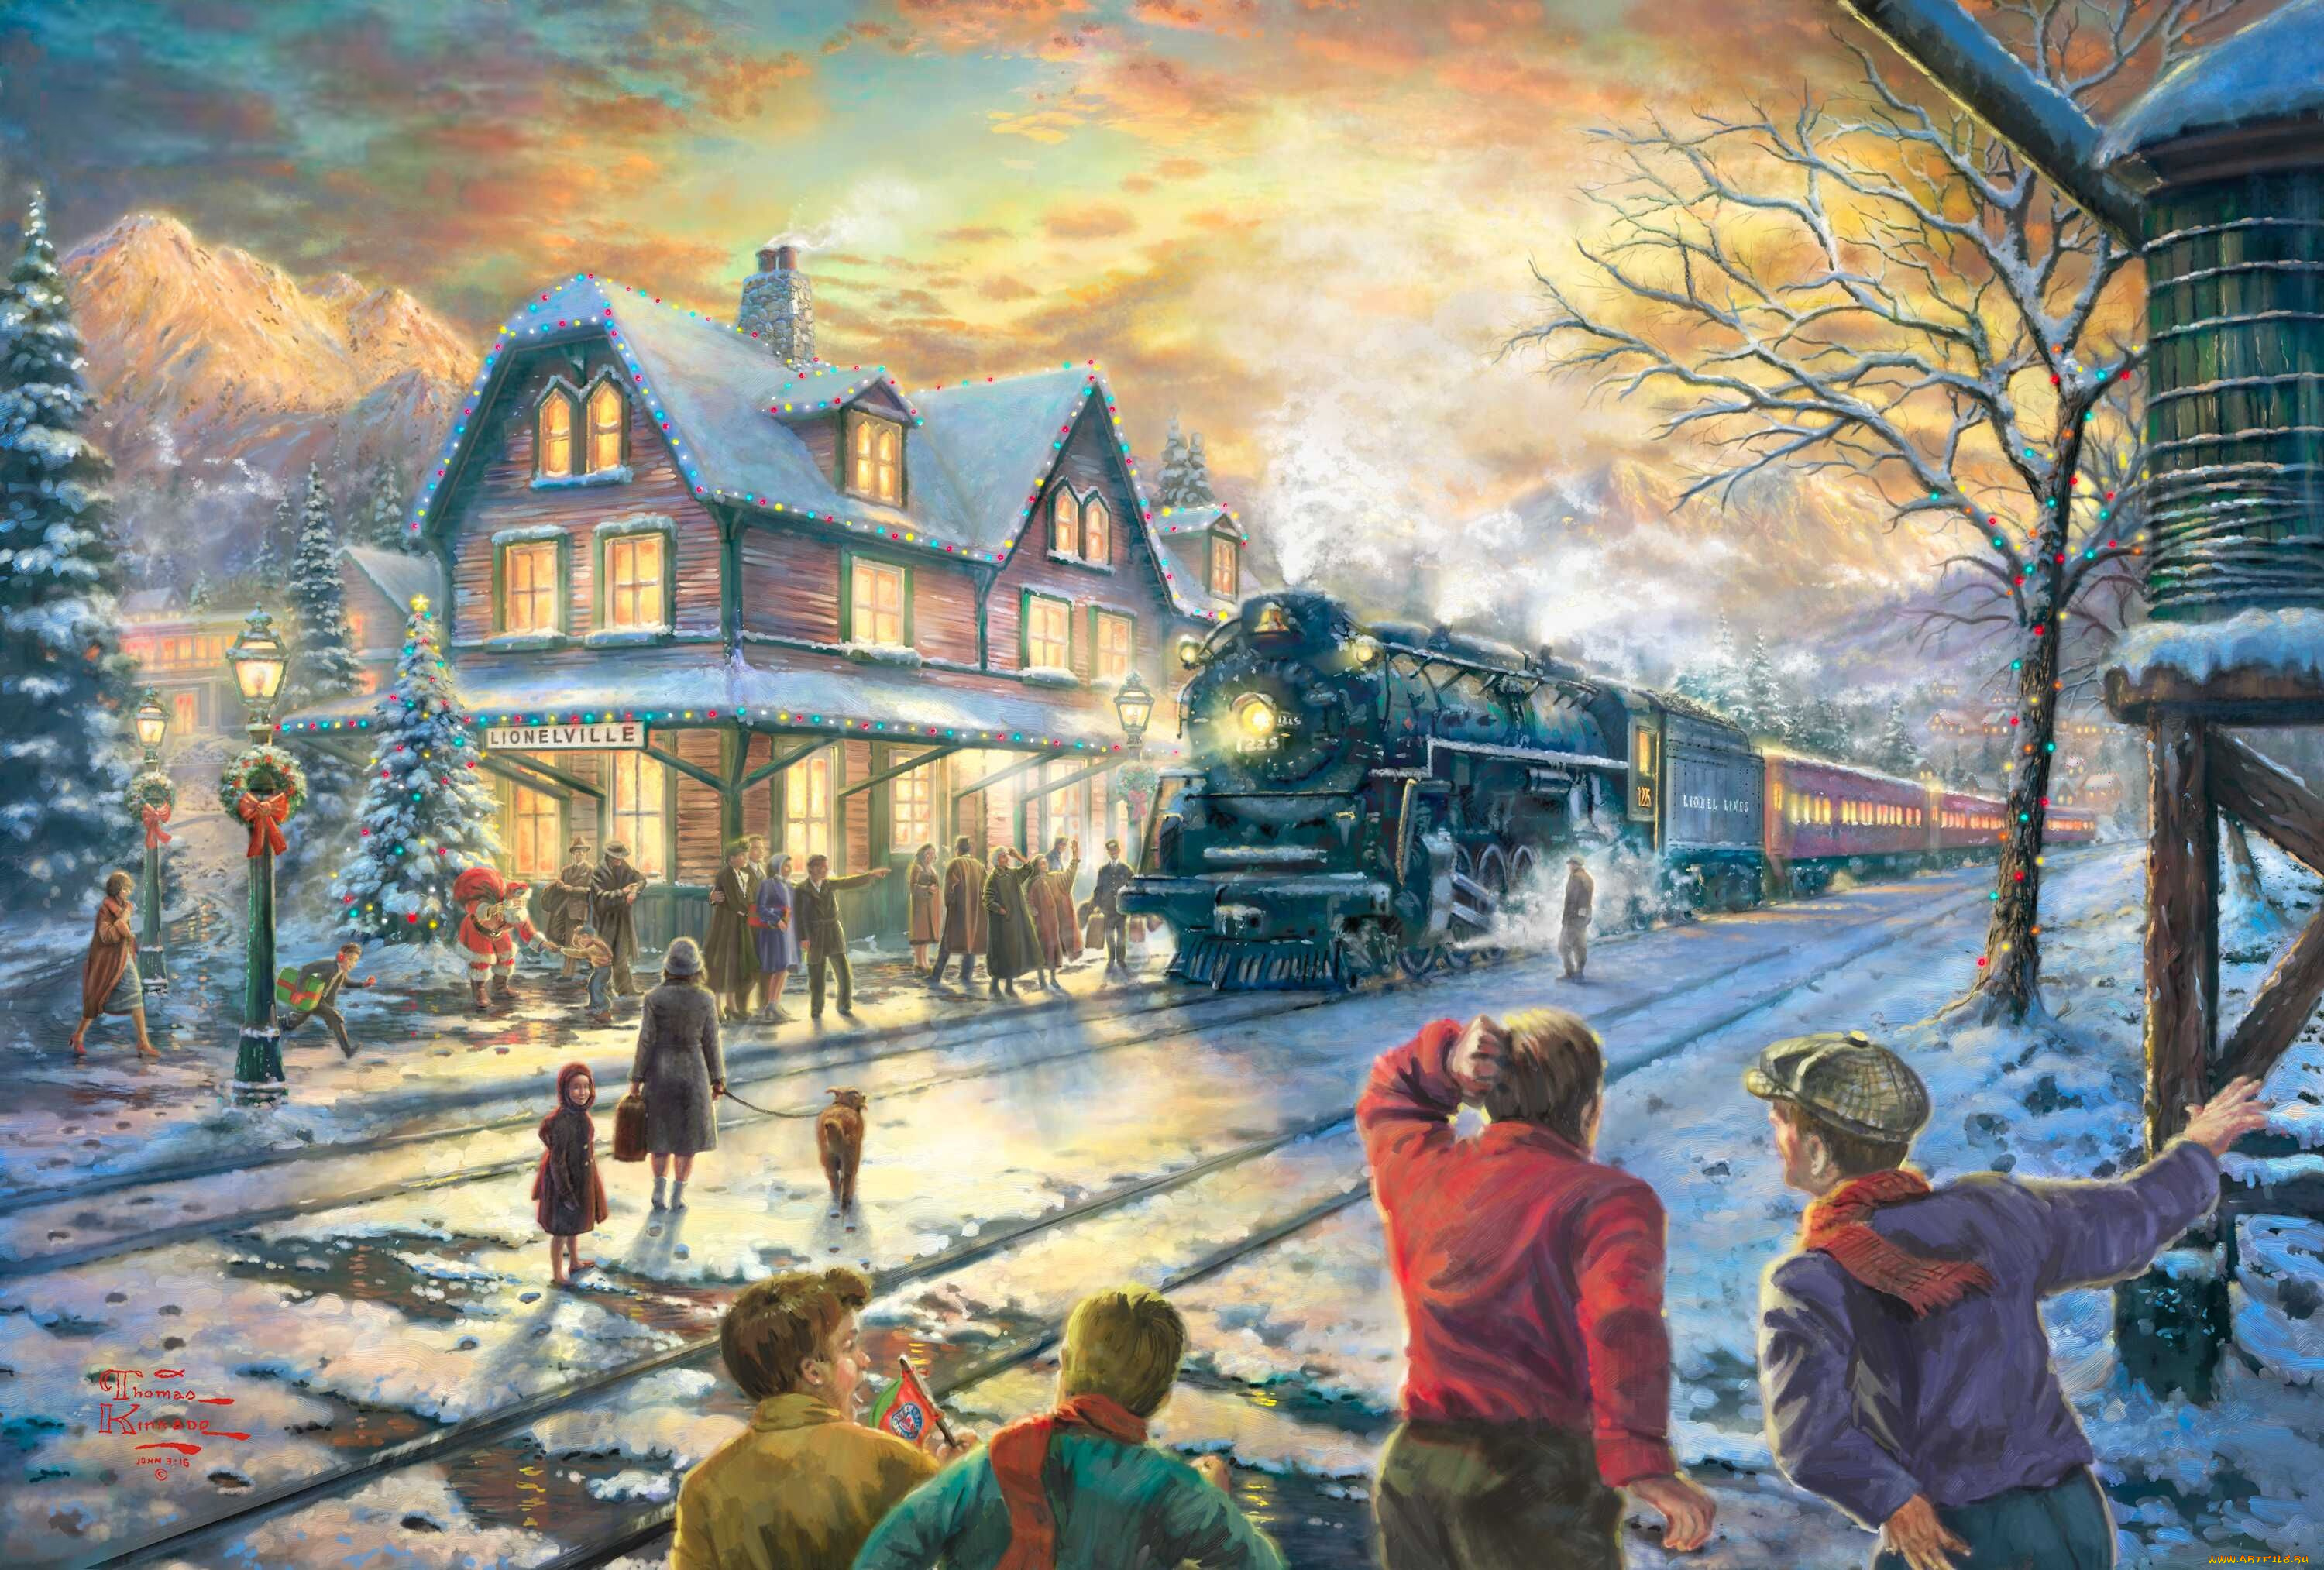 all, aboard, for, christmas, рисованные, thomas, kinkade, санта, клаус, ёлка, рождество, зима, праздник, железная, дорога, поезд, люди